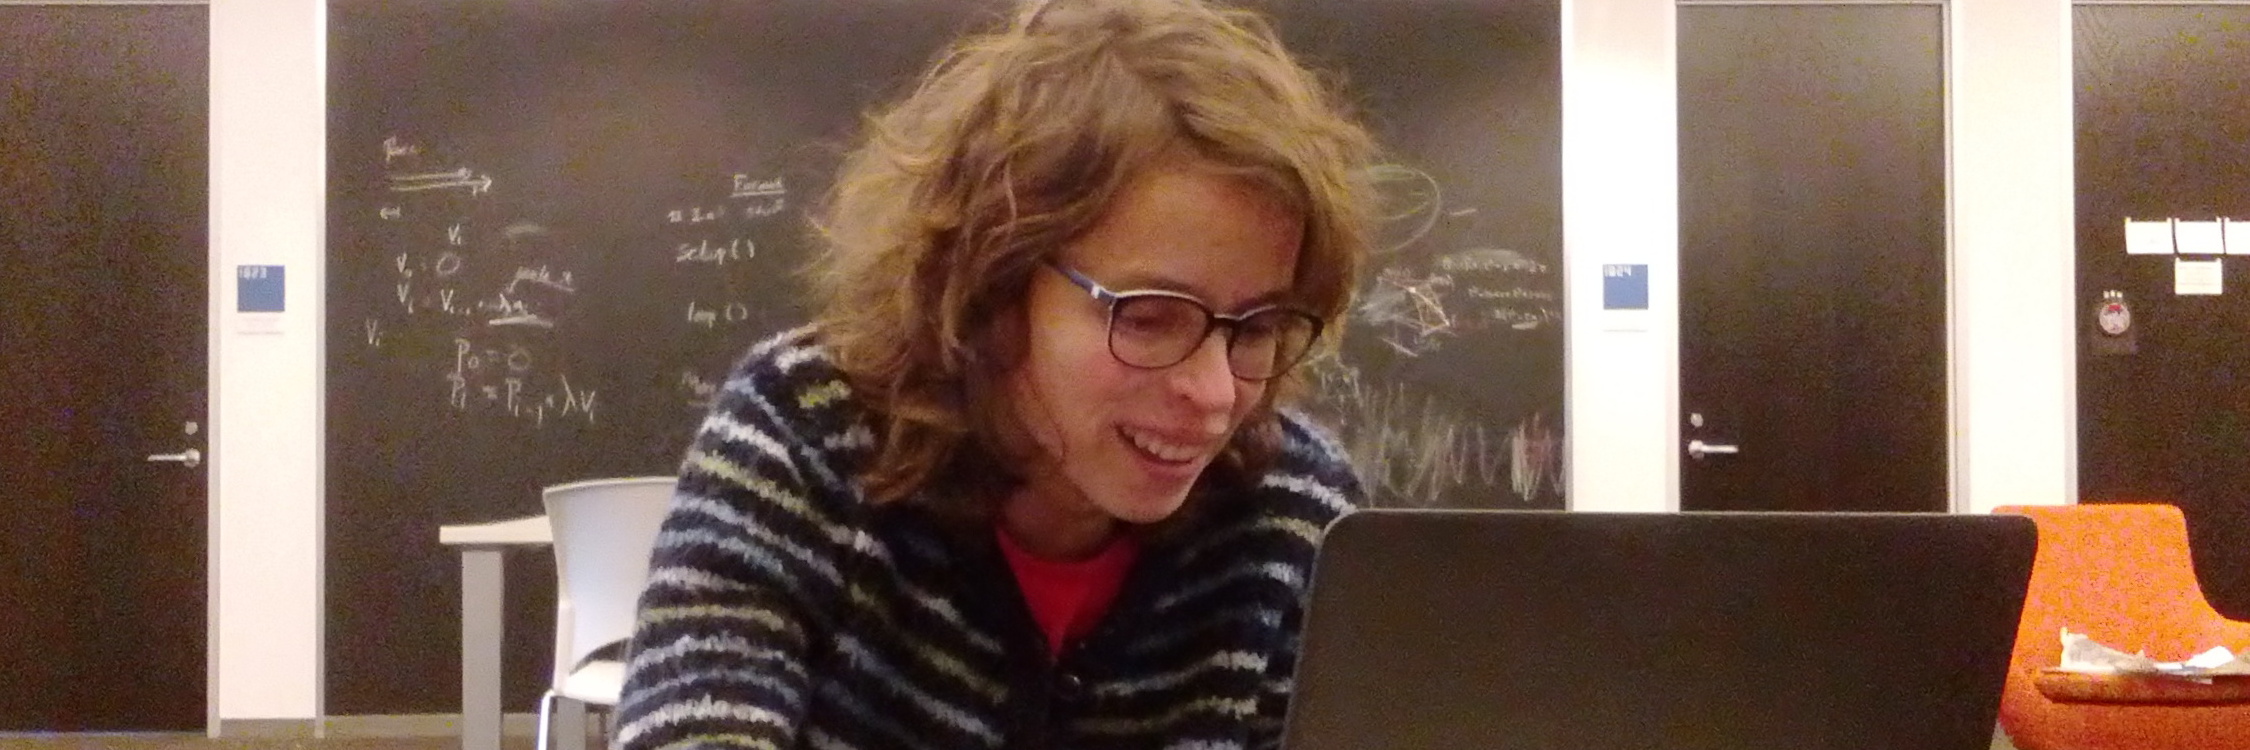 Alba Málaga travaillant joyeusement sur un ordinateur.